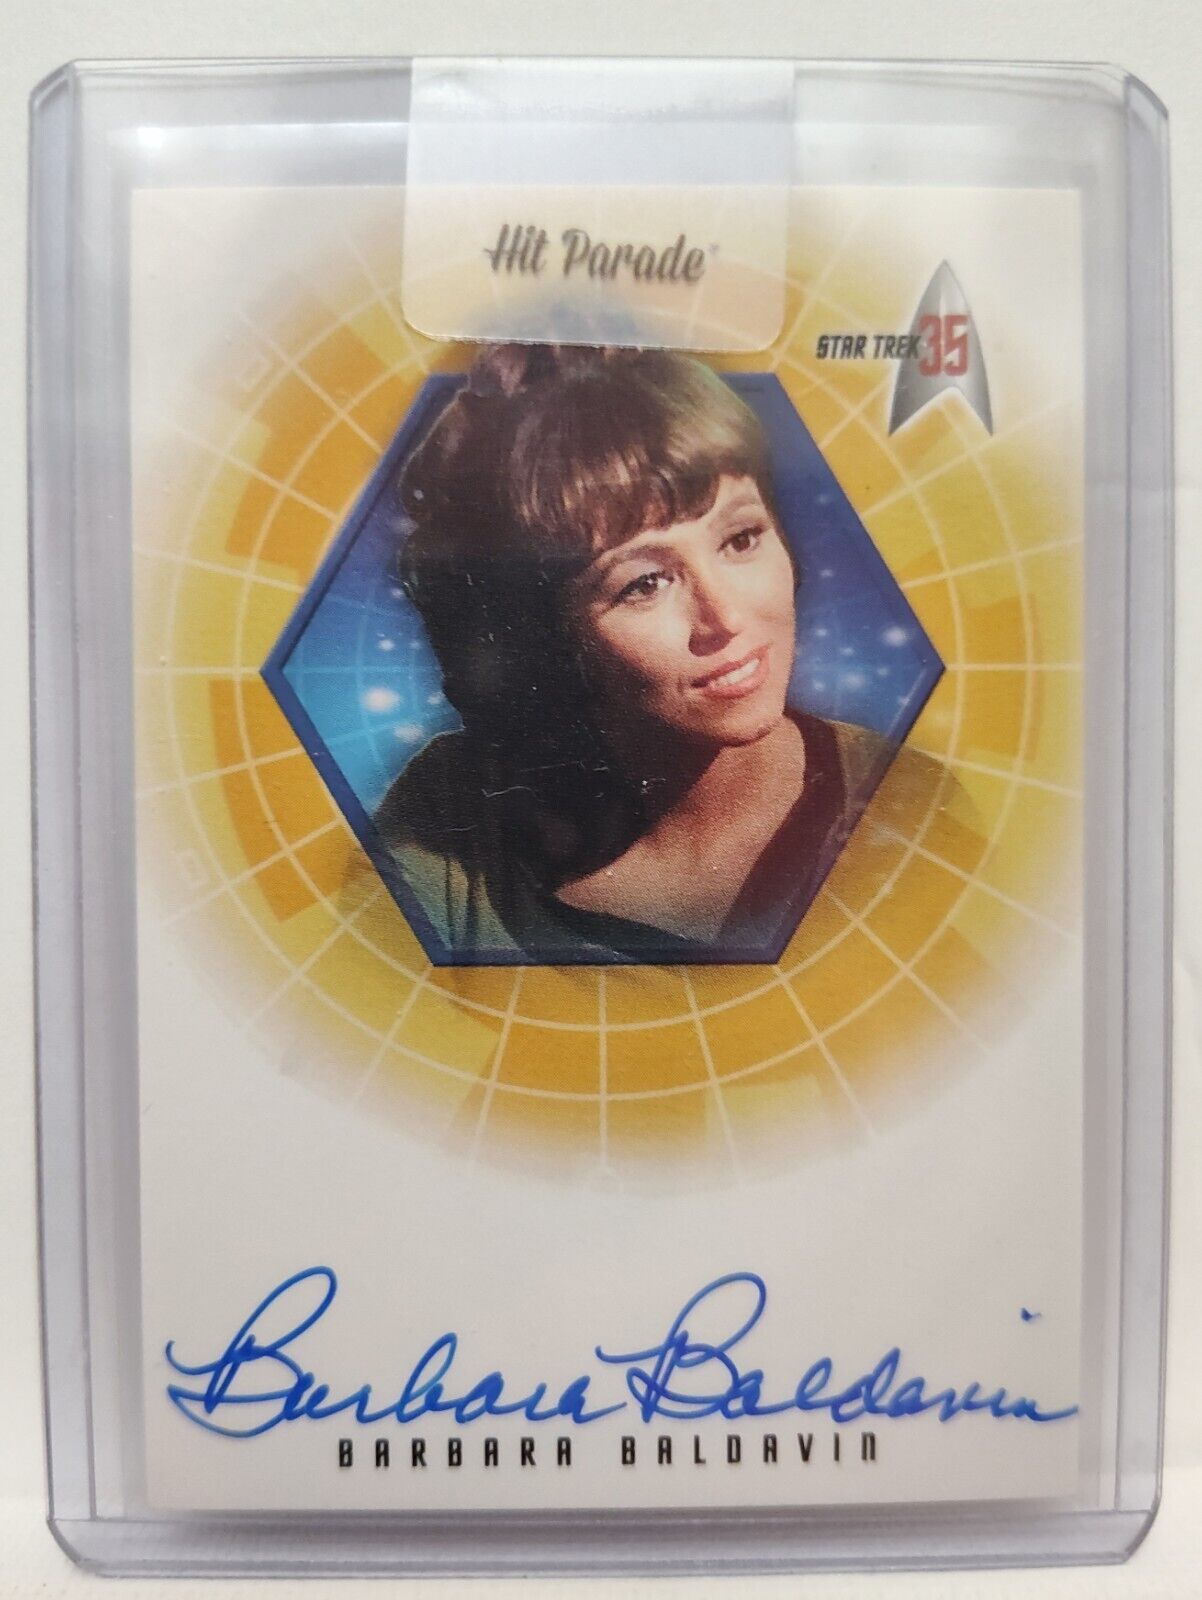 2001 Star Trek 35th Anniversary Barbara Baldavin (Ensign) Autograph - A26